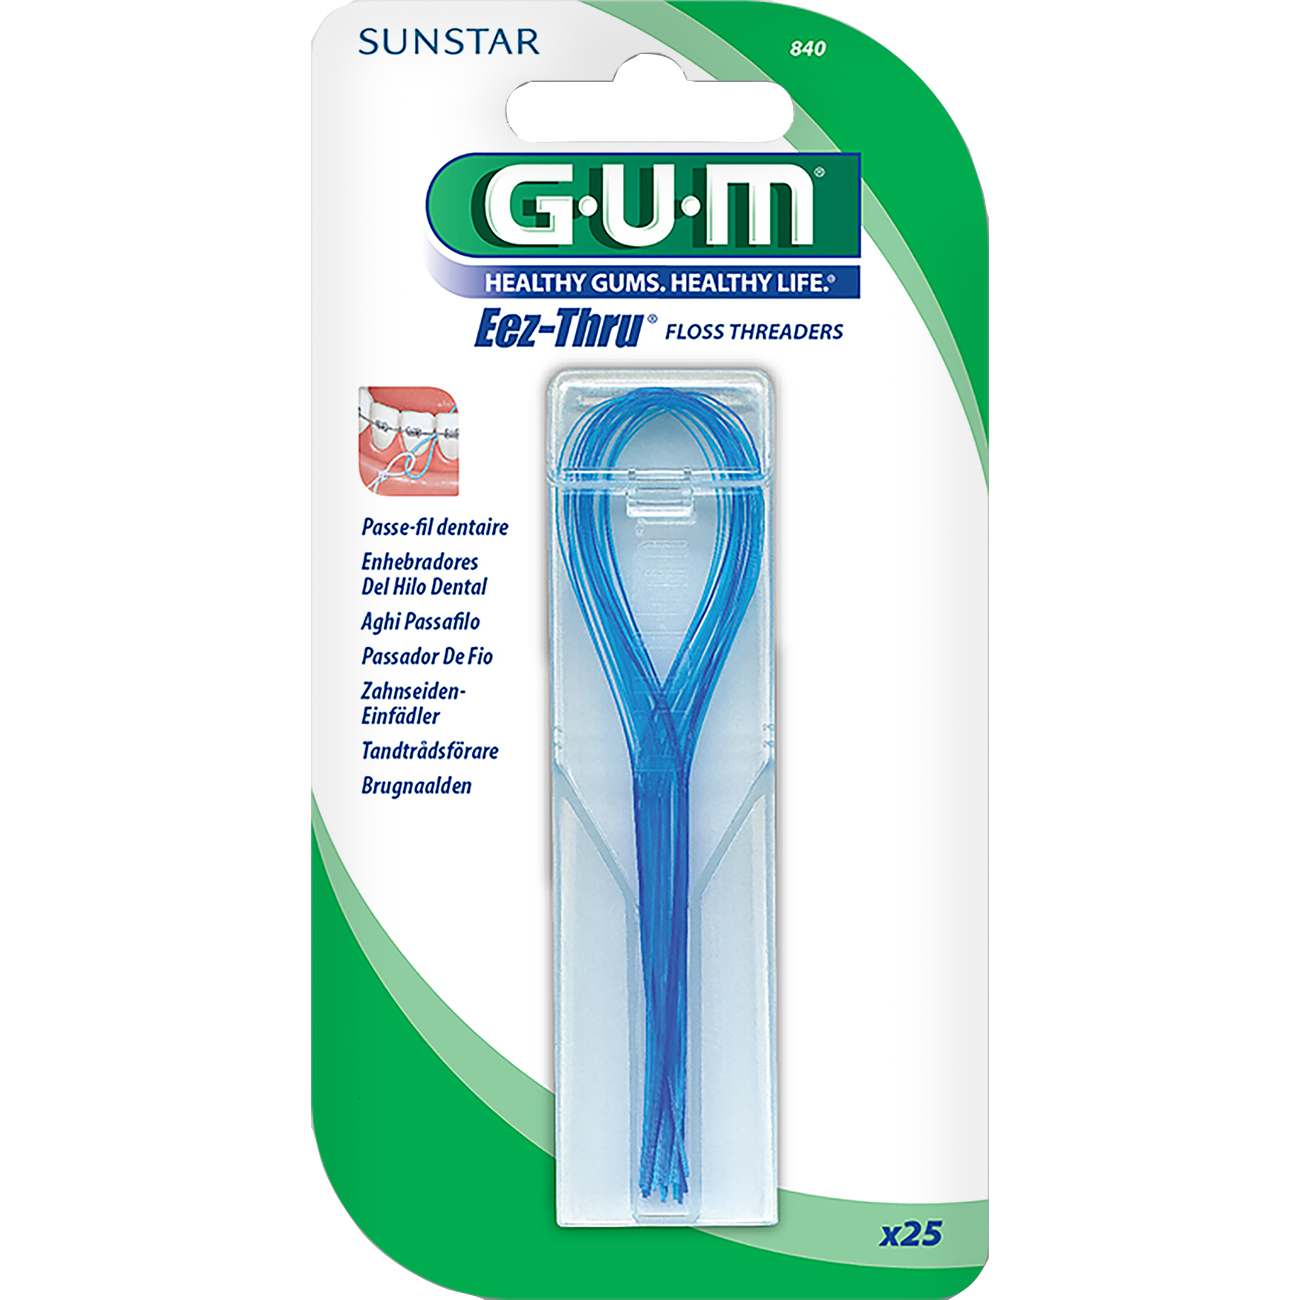 840 G·U·M Floss Threaders : เข็มร้อยไหมขัดฟัน